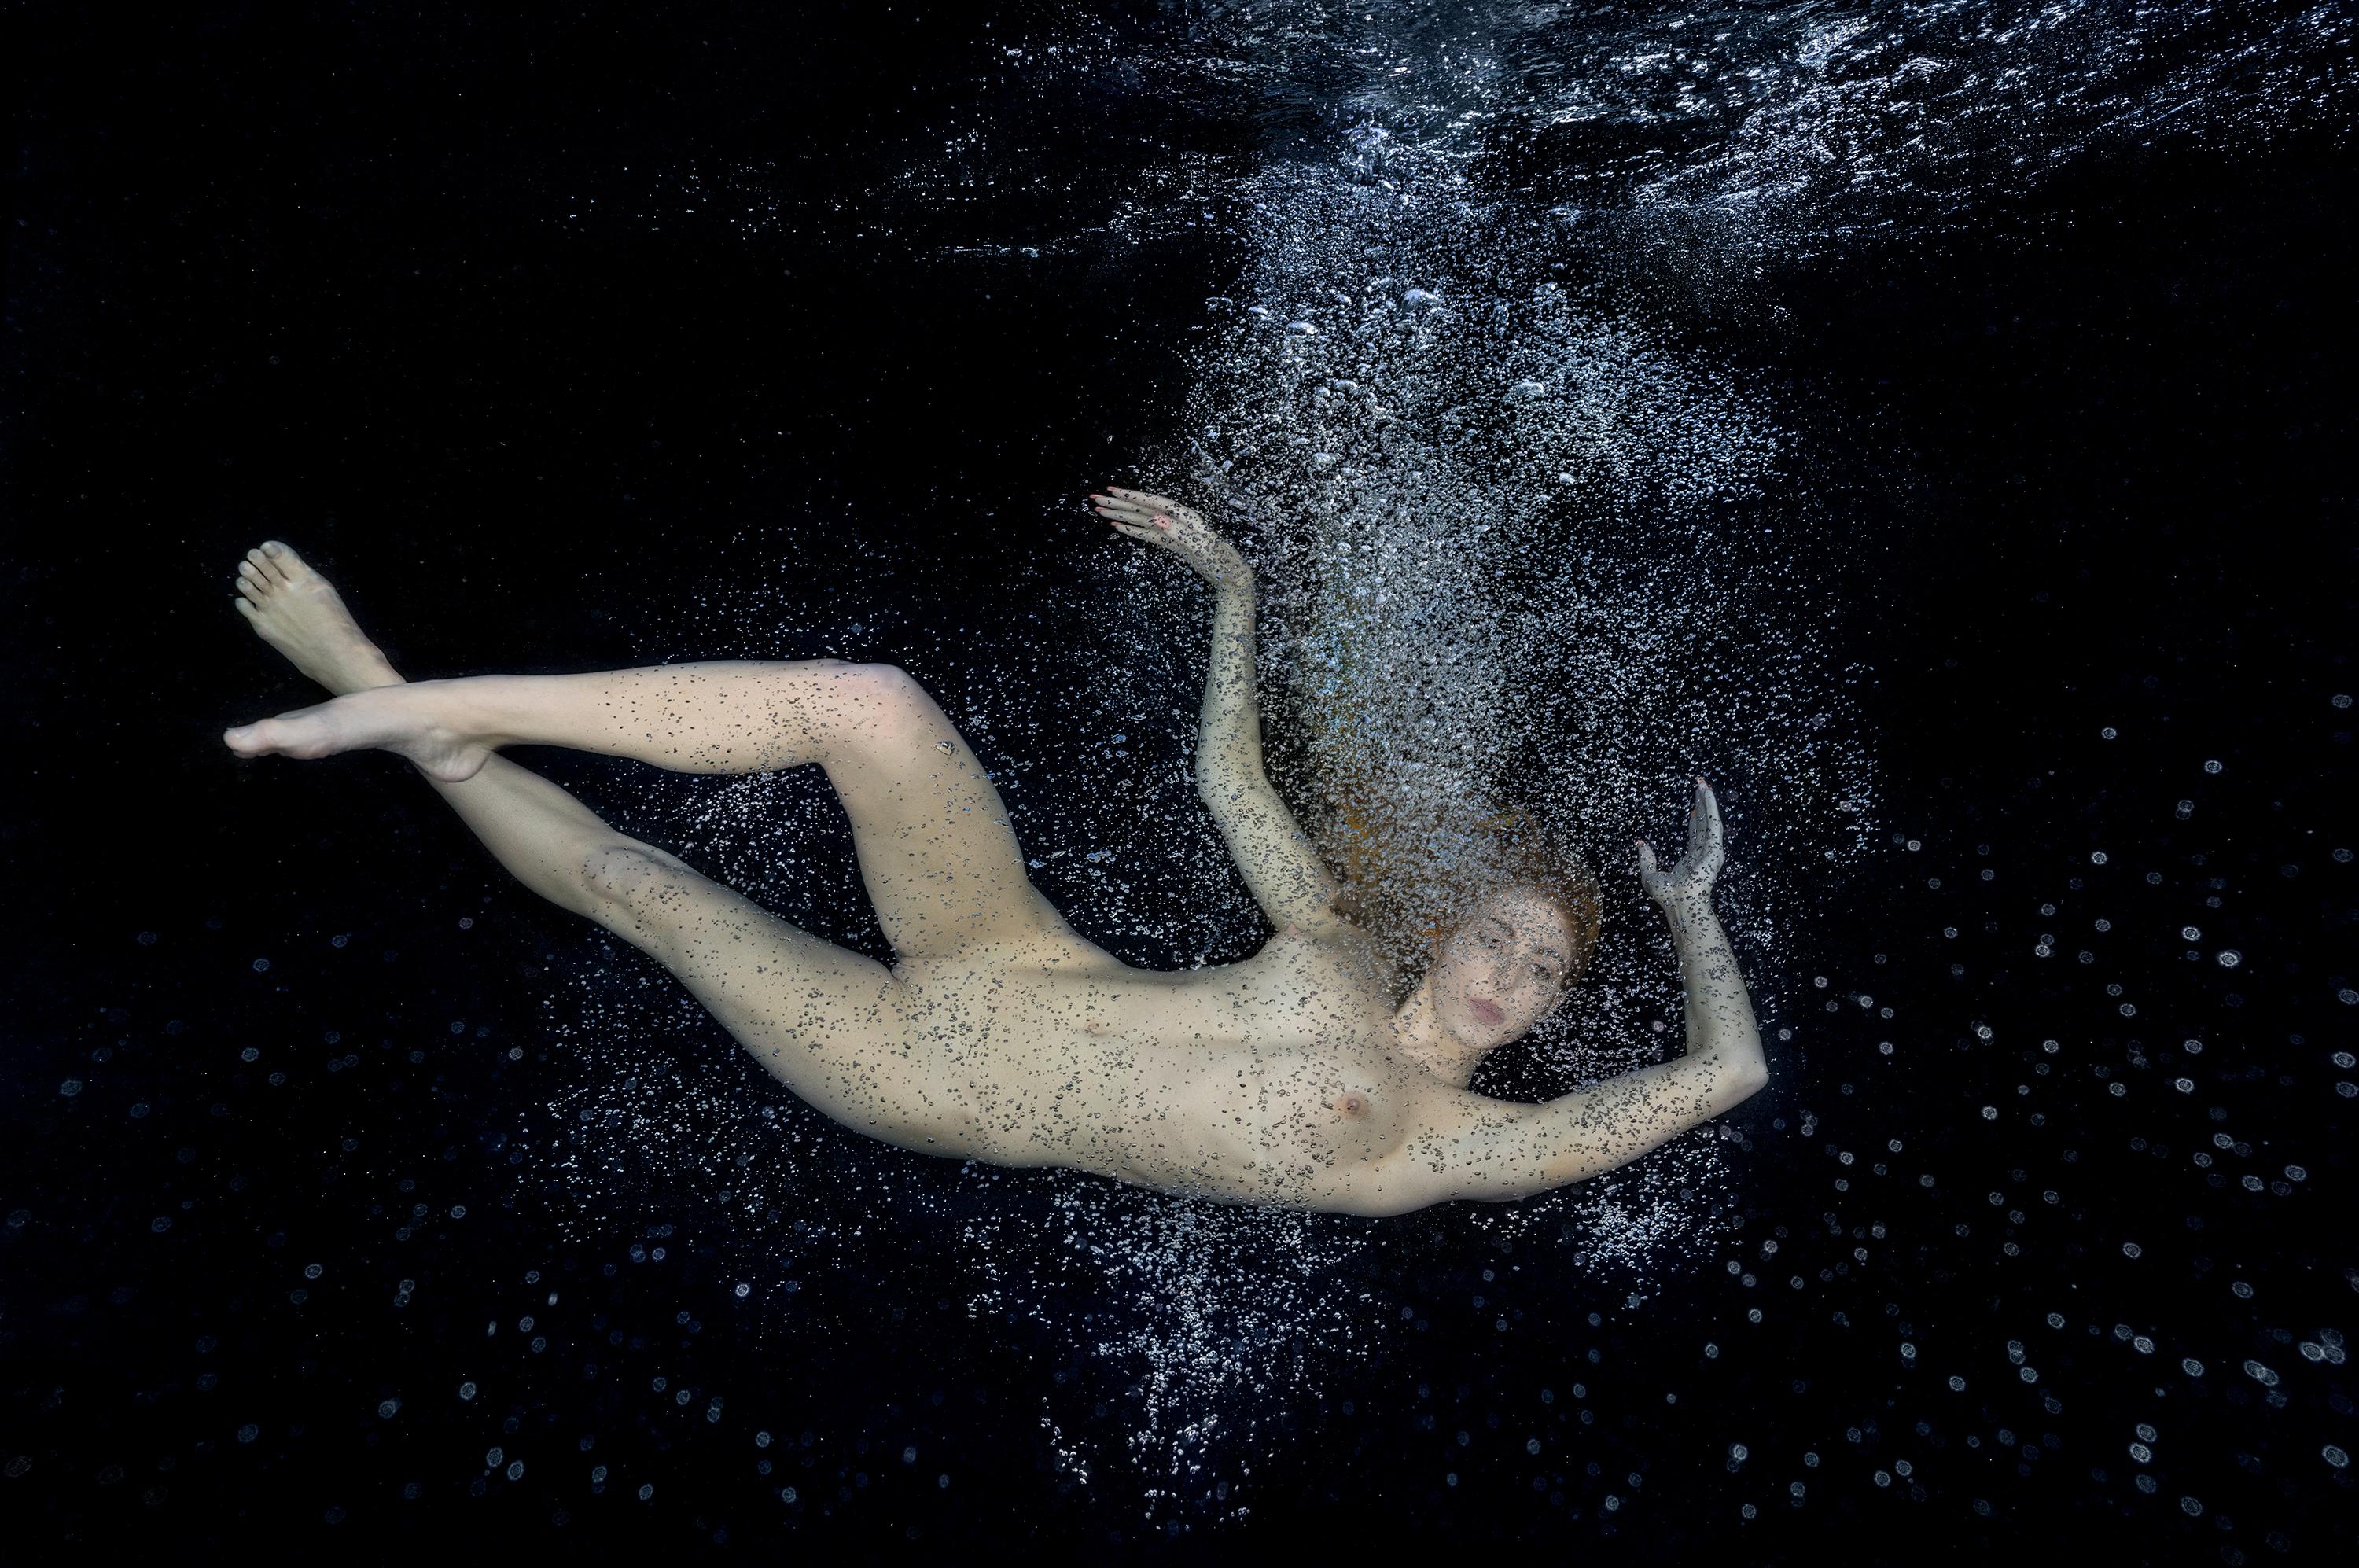 Danae - underwater nude photograph - archival pigment 17" x 24"